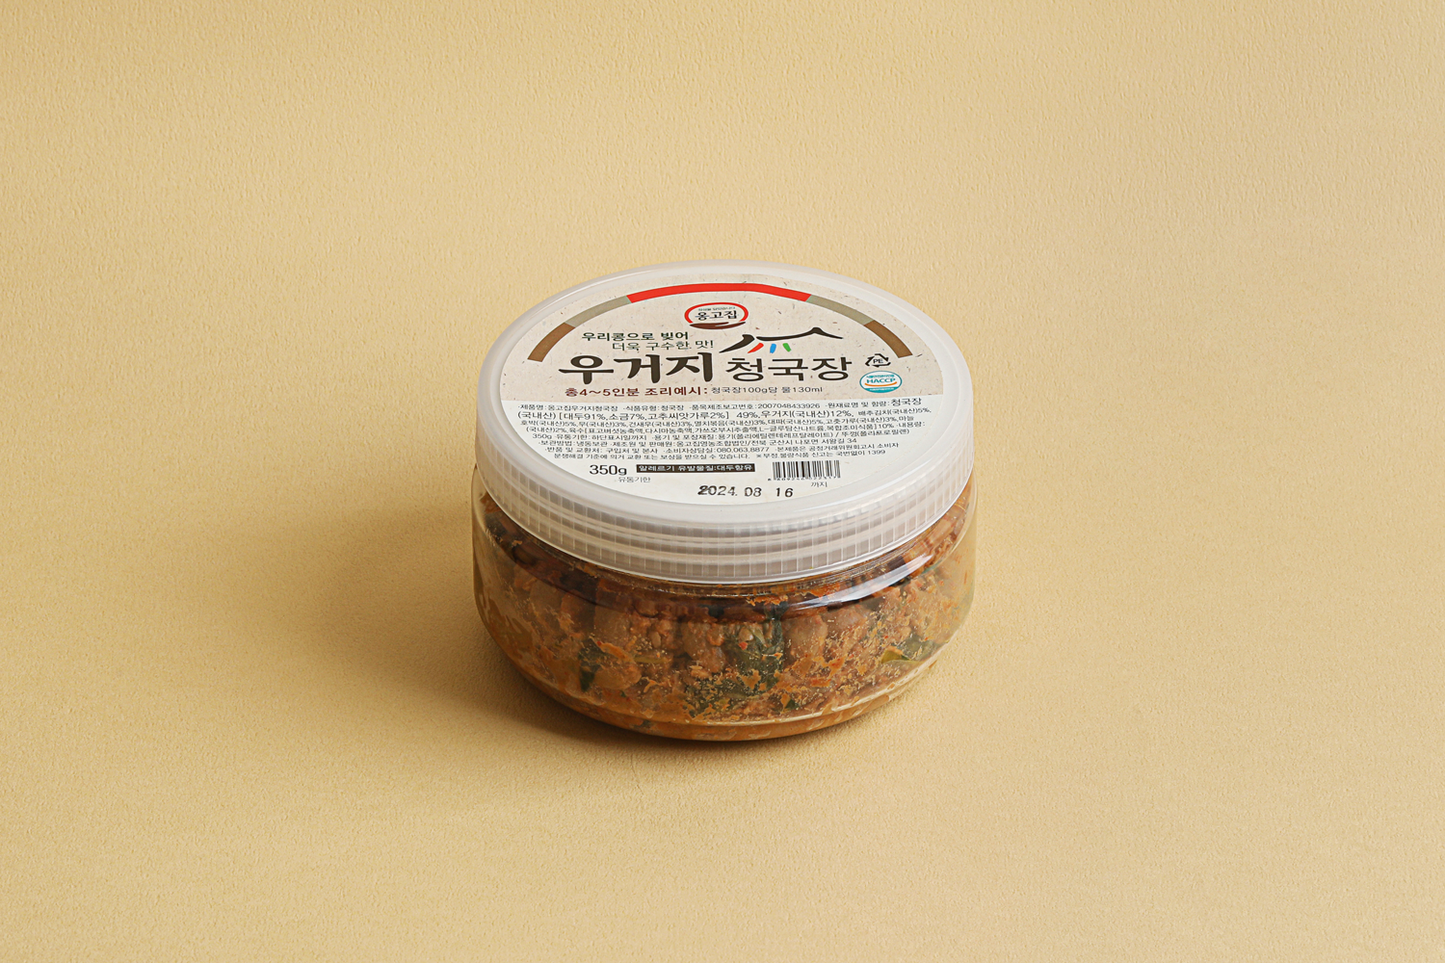 Ongojip Woogeoji Cheonggukjang (Rich Soybean Paste with Dried Cabbage)